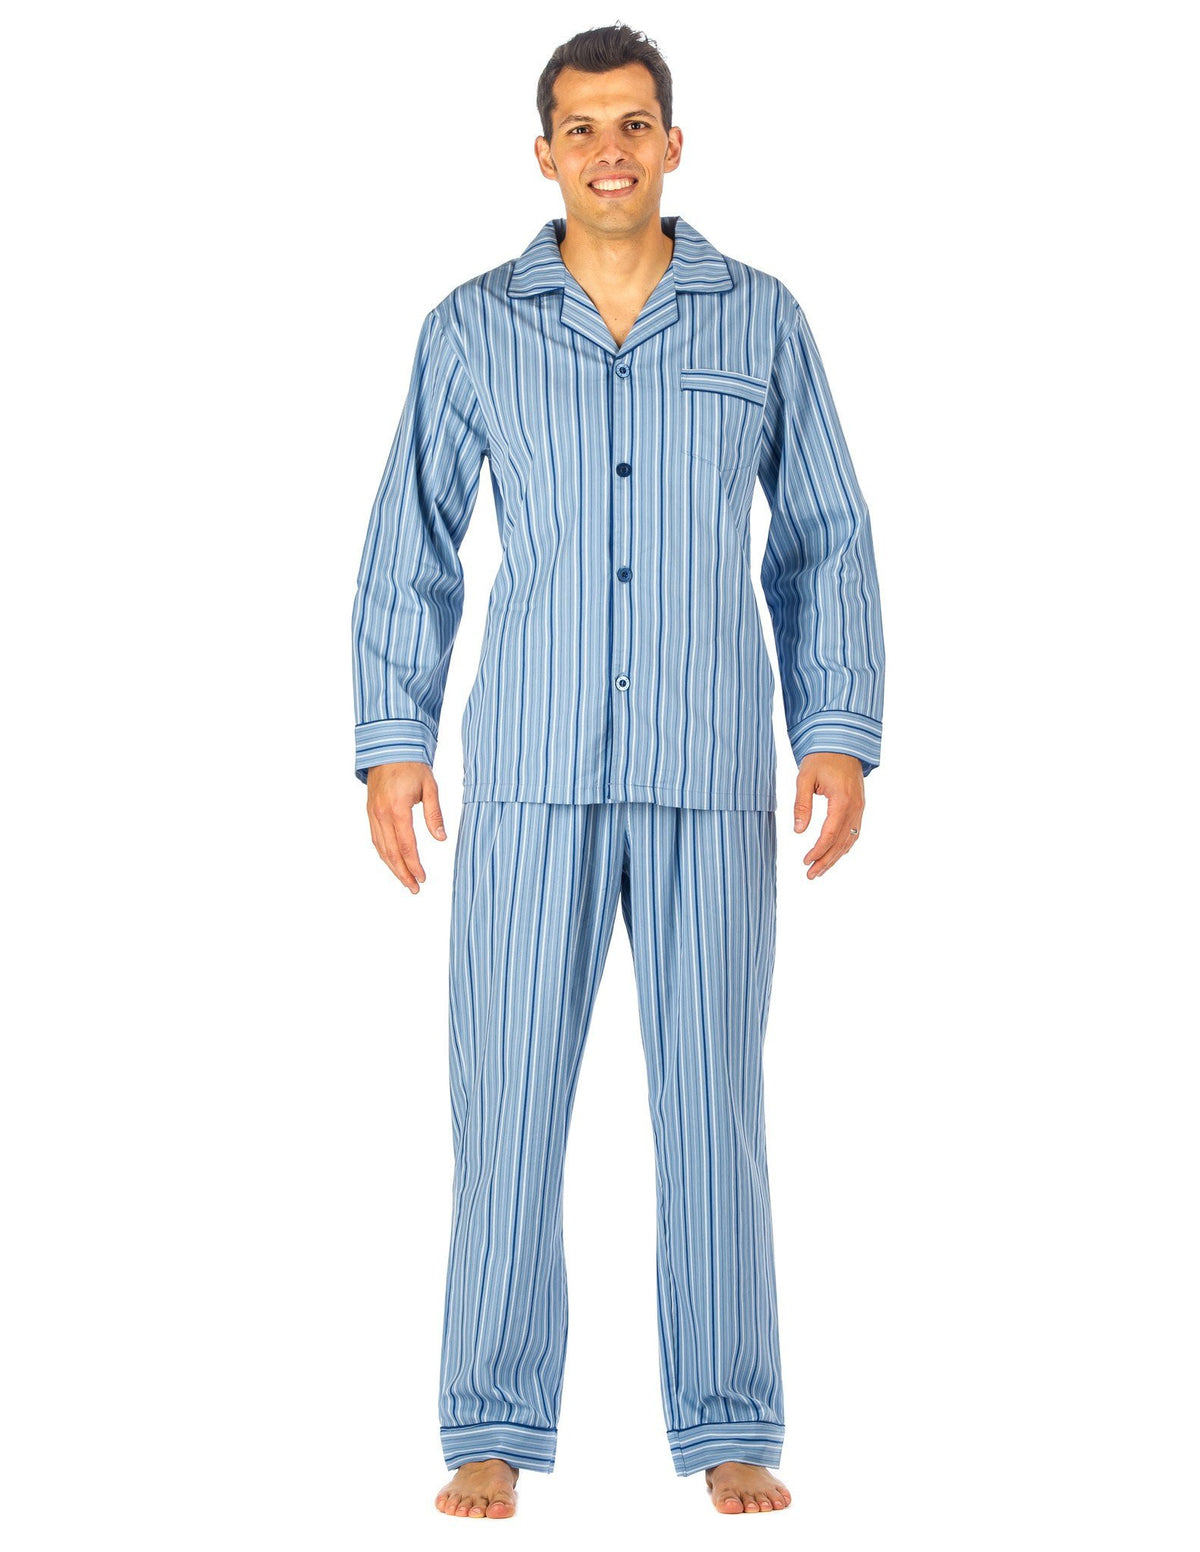 Mens Premium 100% Cotton Woven Pajama Sleepwear Set - Stripes Light Blue